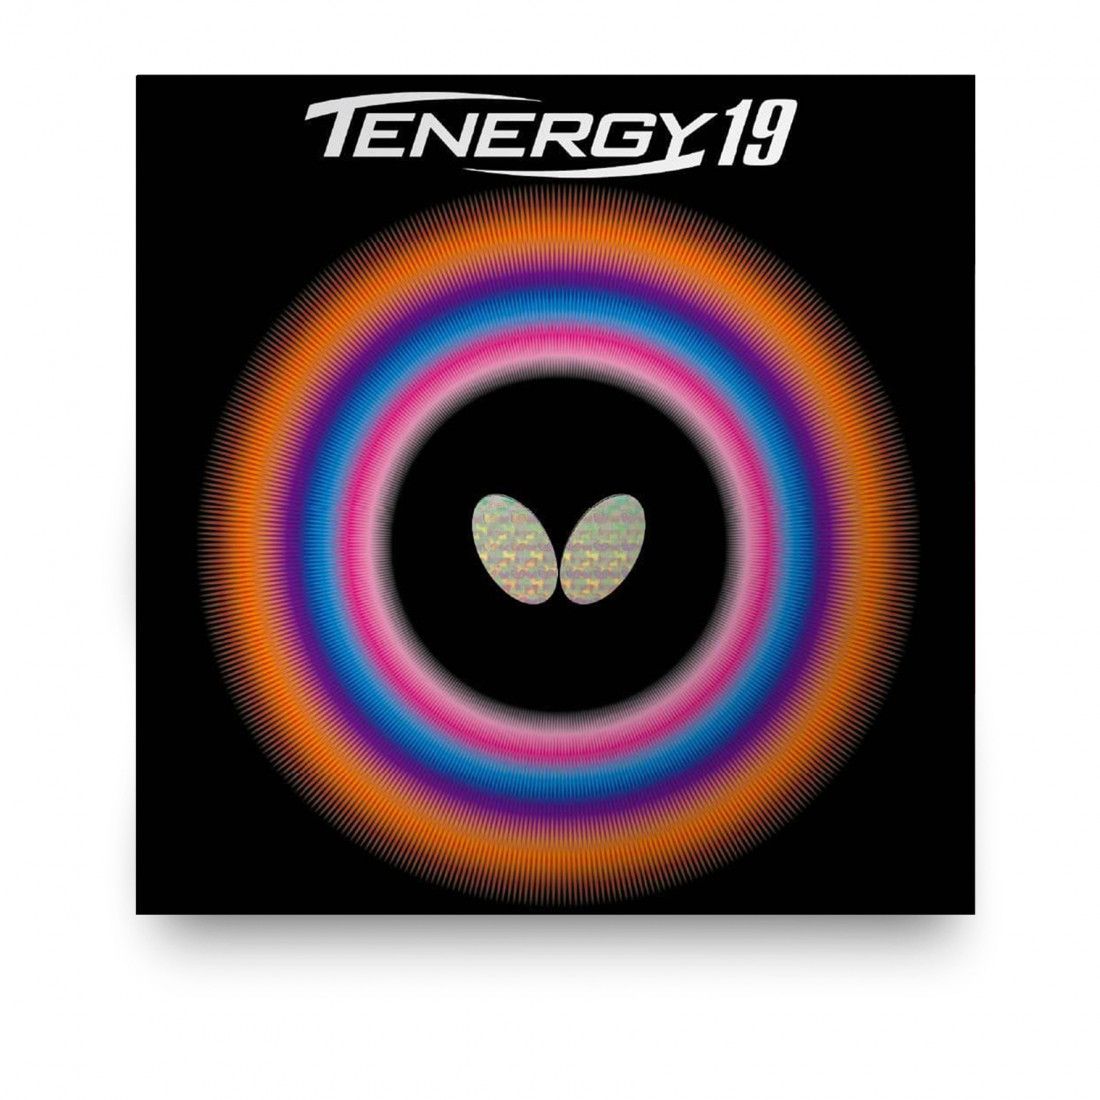 Накладка на ракетку для настольного тенниса Butterfly Tenergy 19 2.1 накладка черная